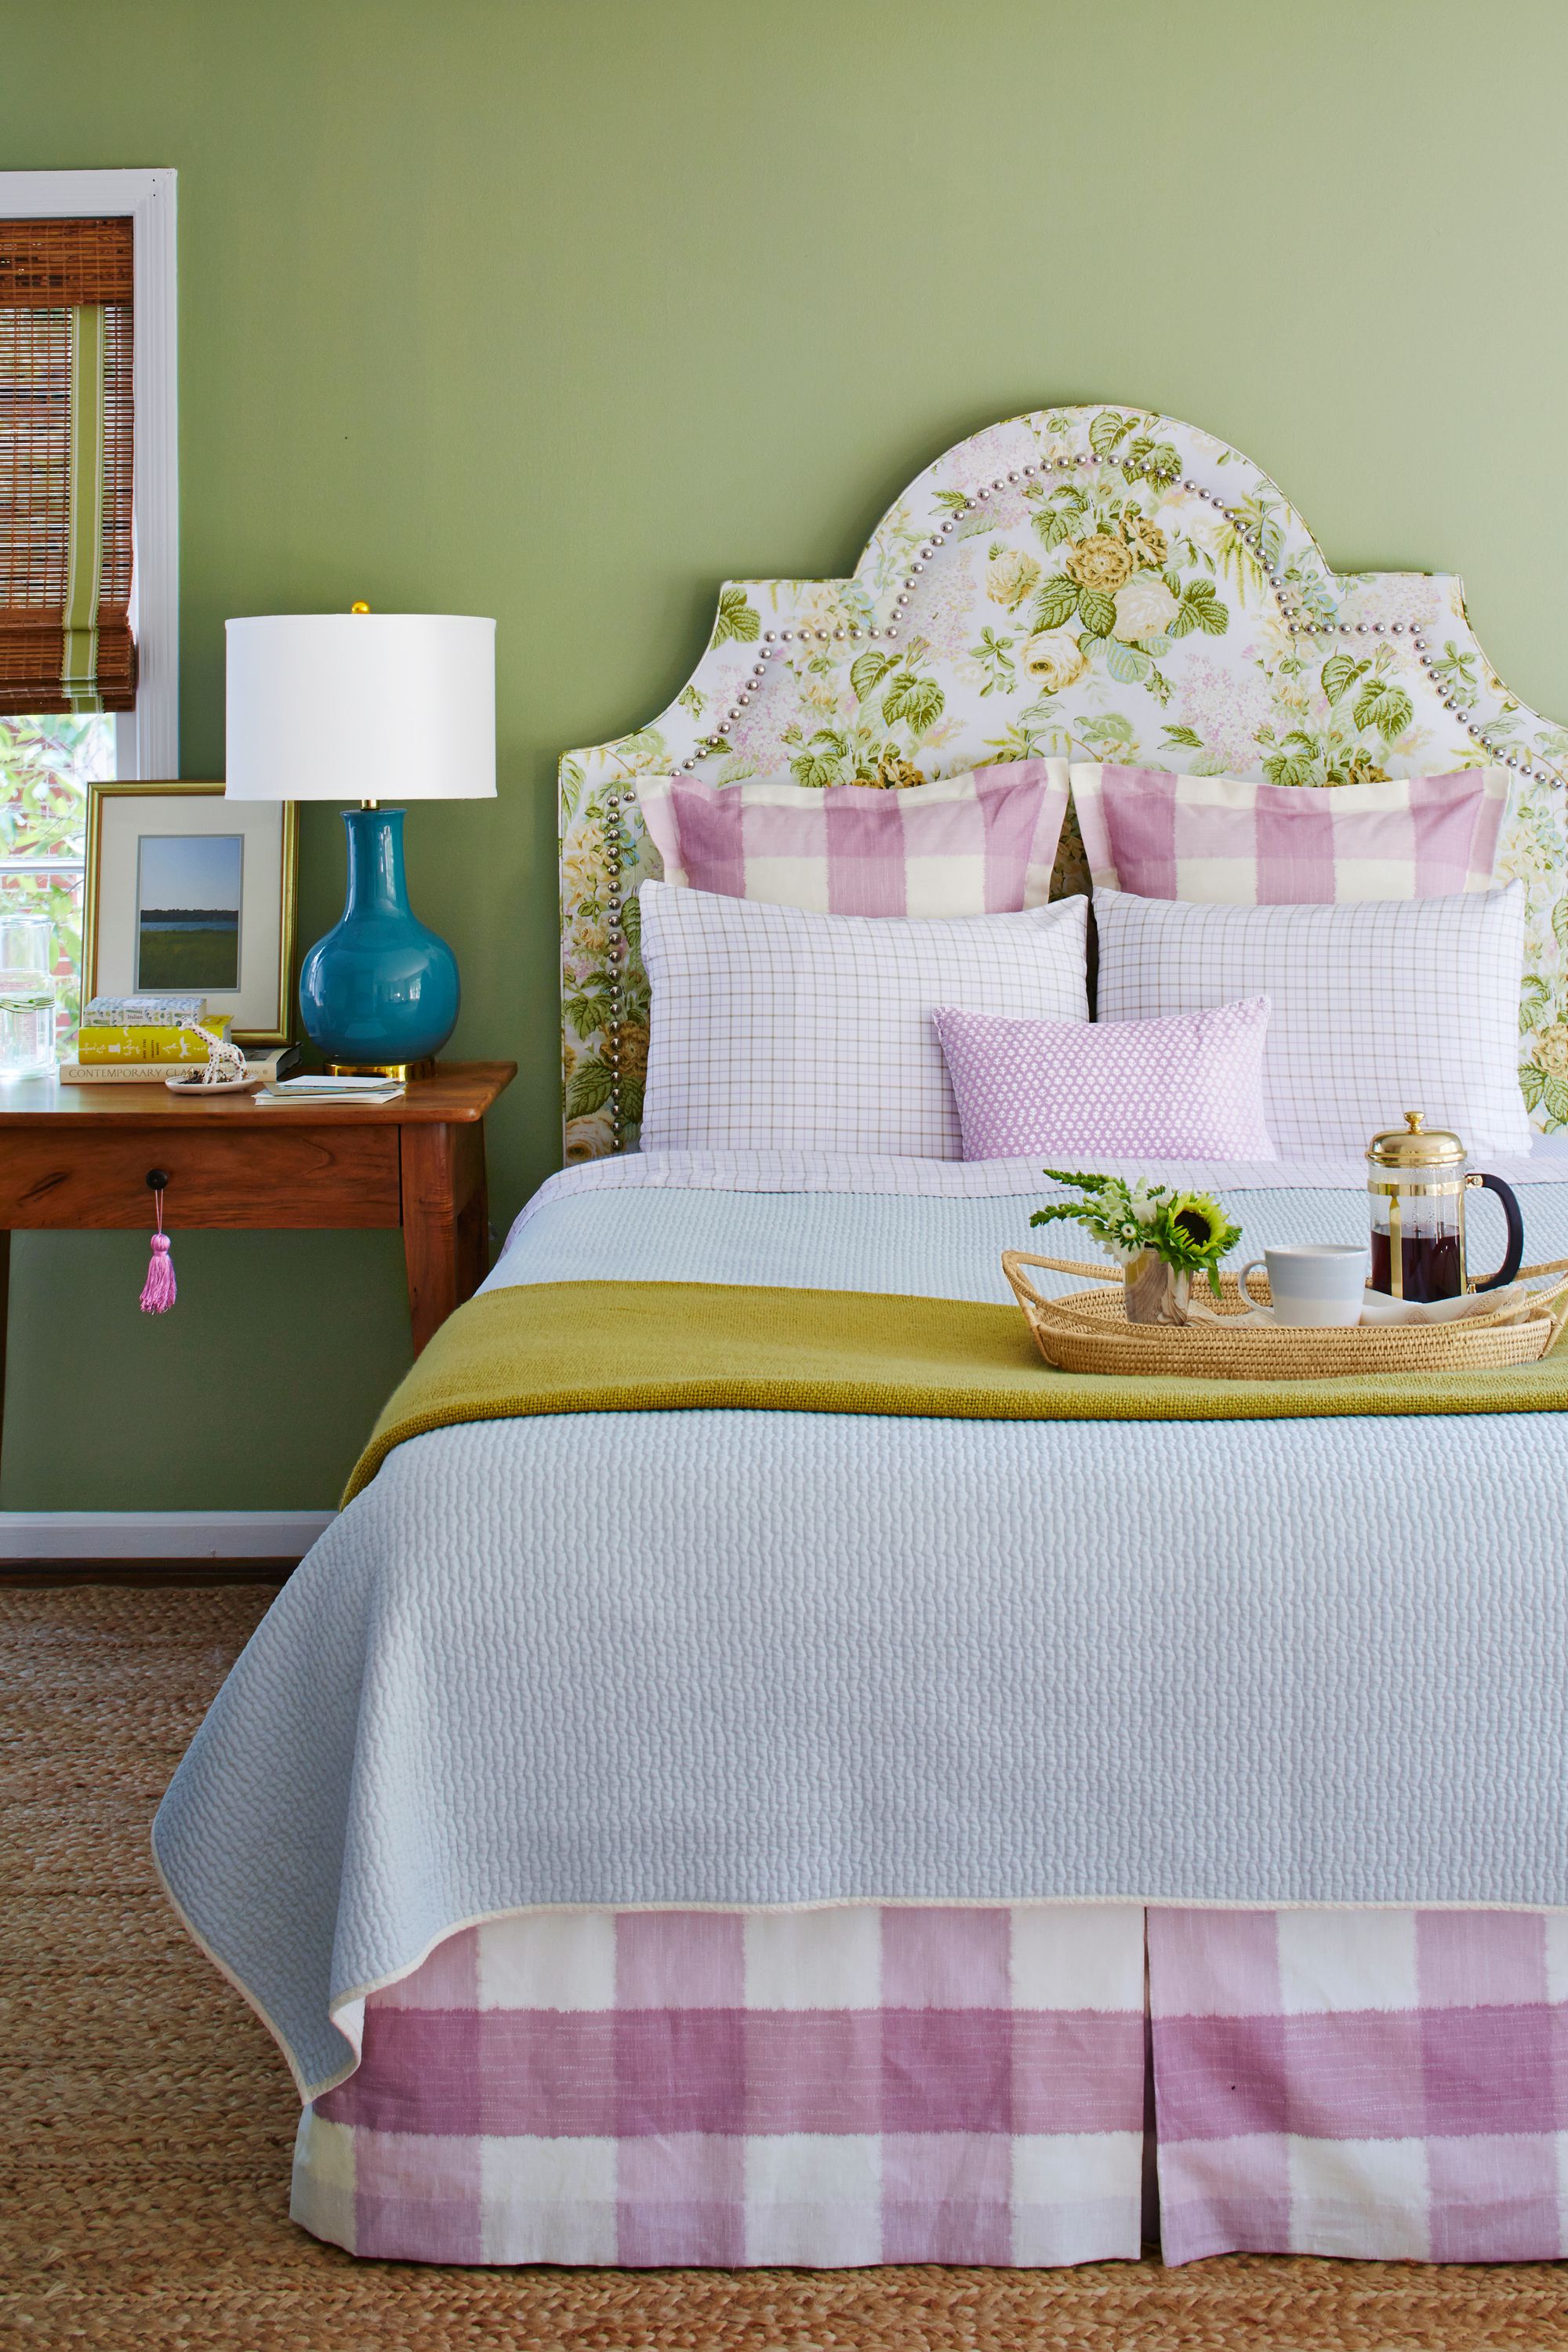 Floral Upholstered Headboard Green Bedroom Walls Gingham Euro Shams Bedskirt